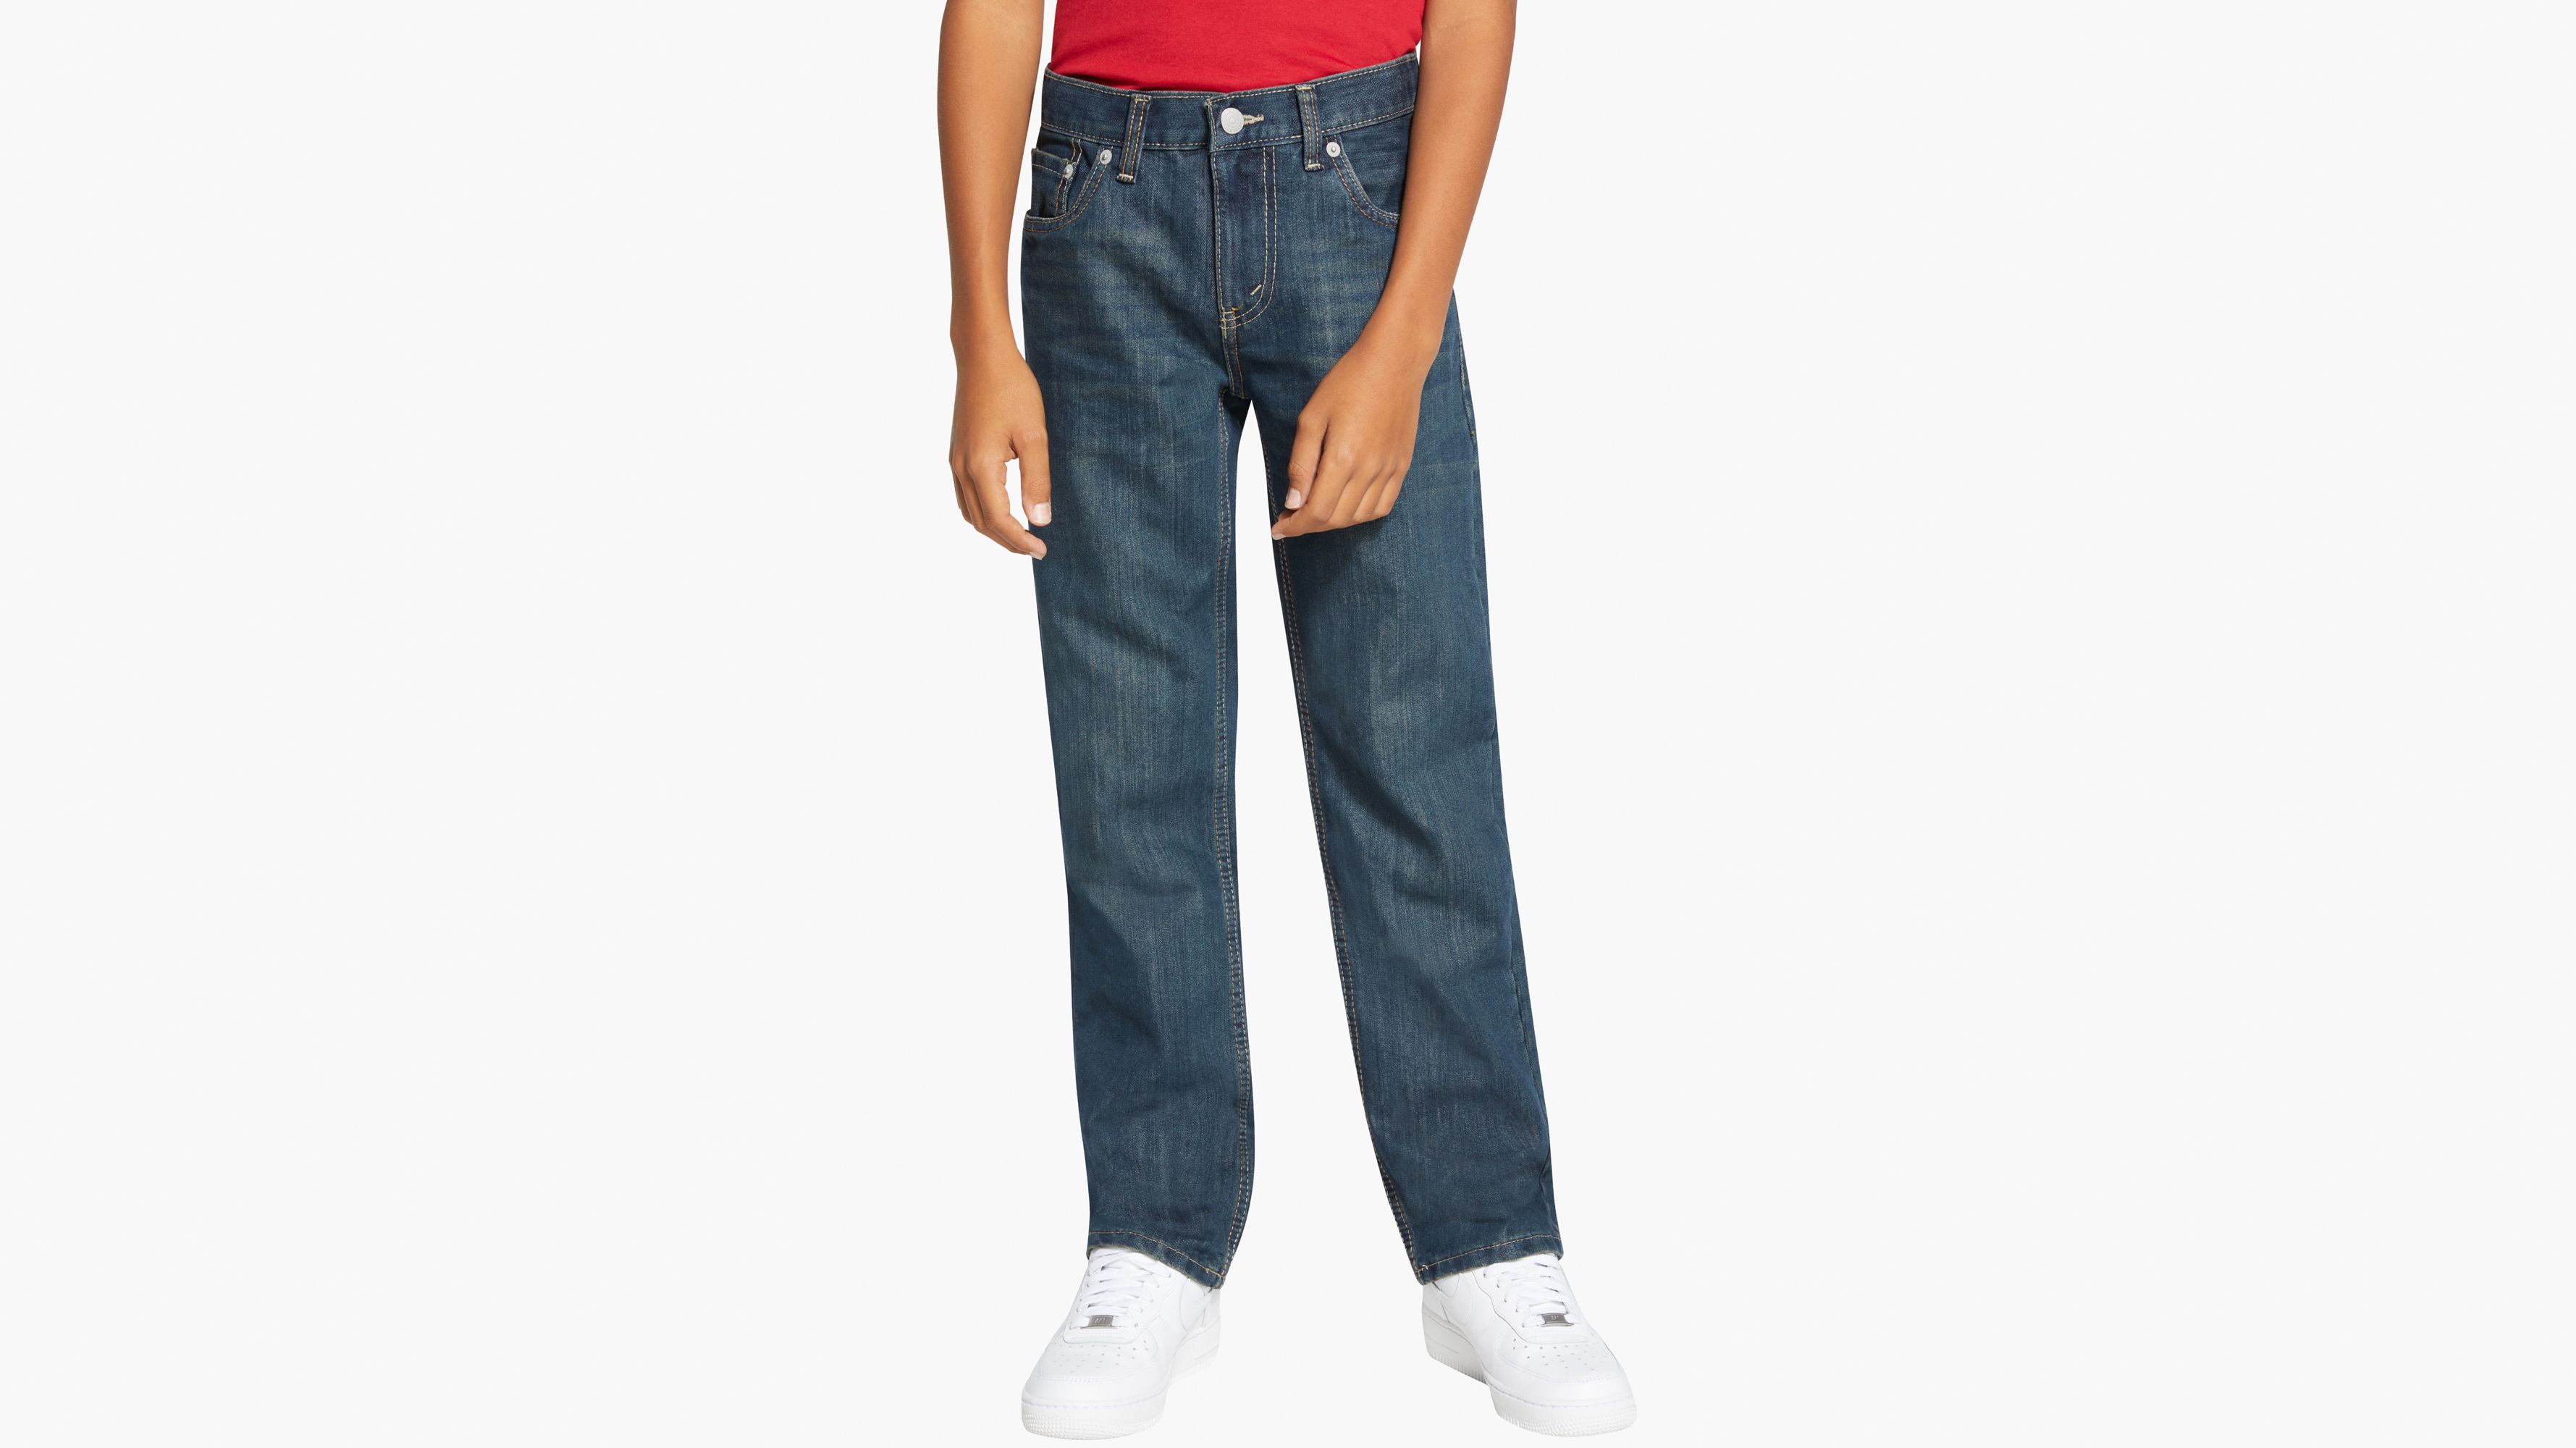 boys size 8 jeans